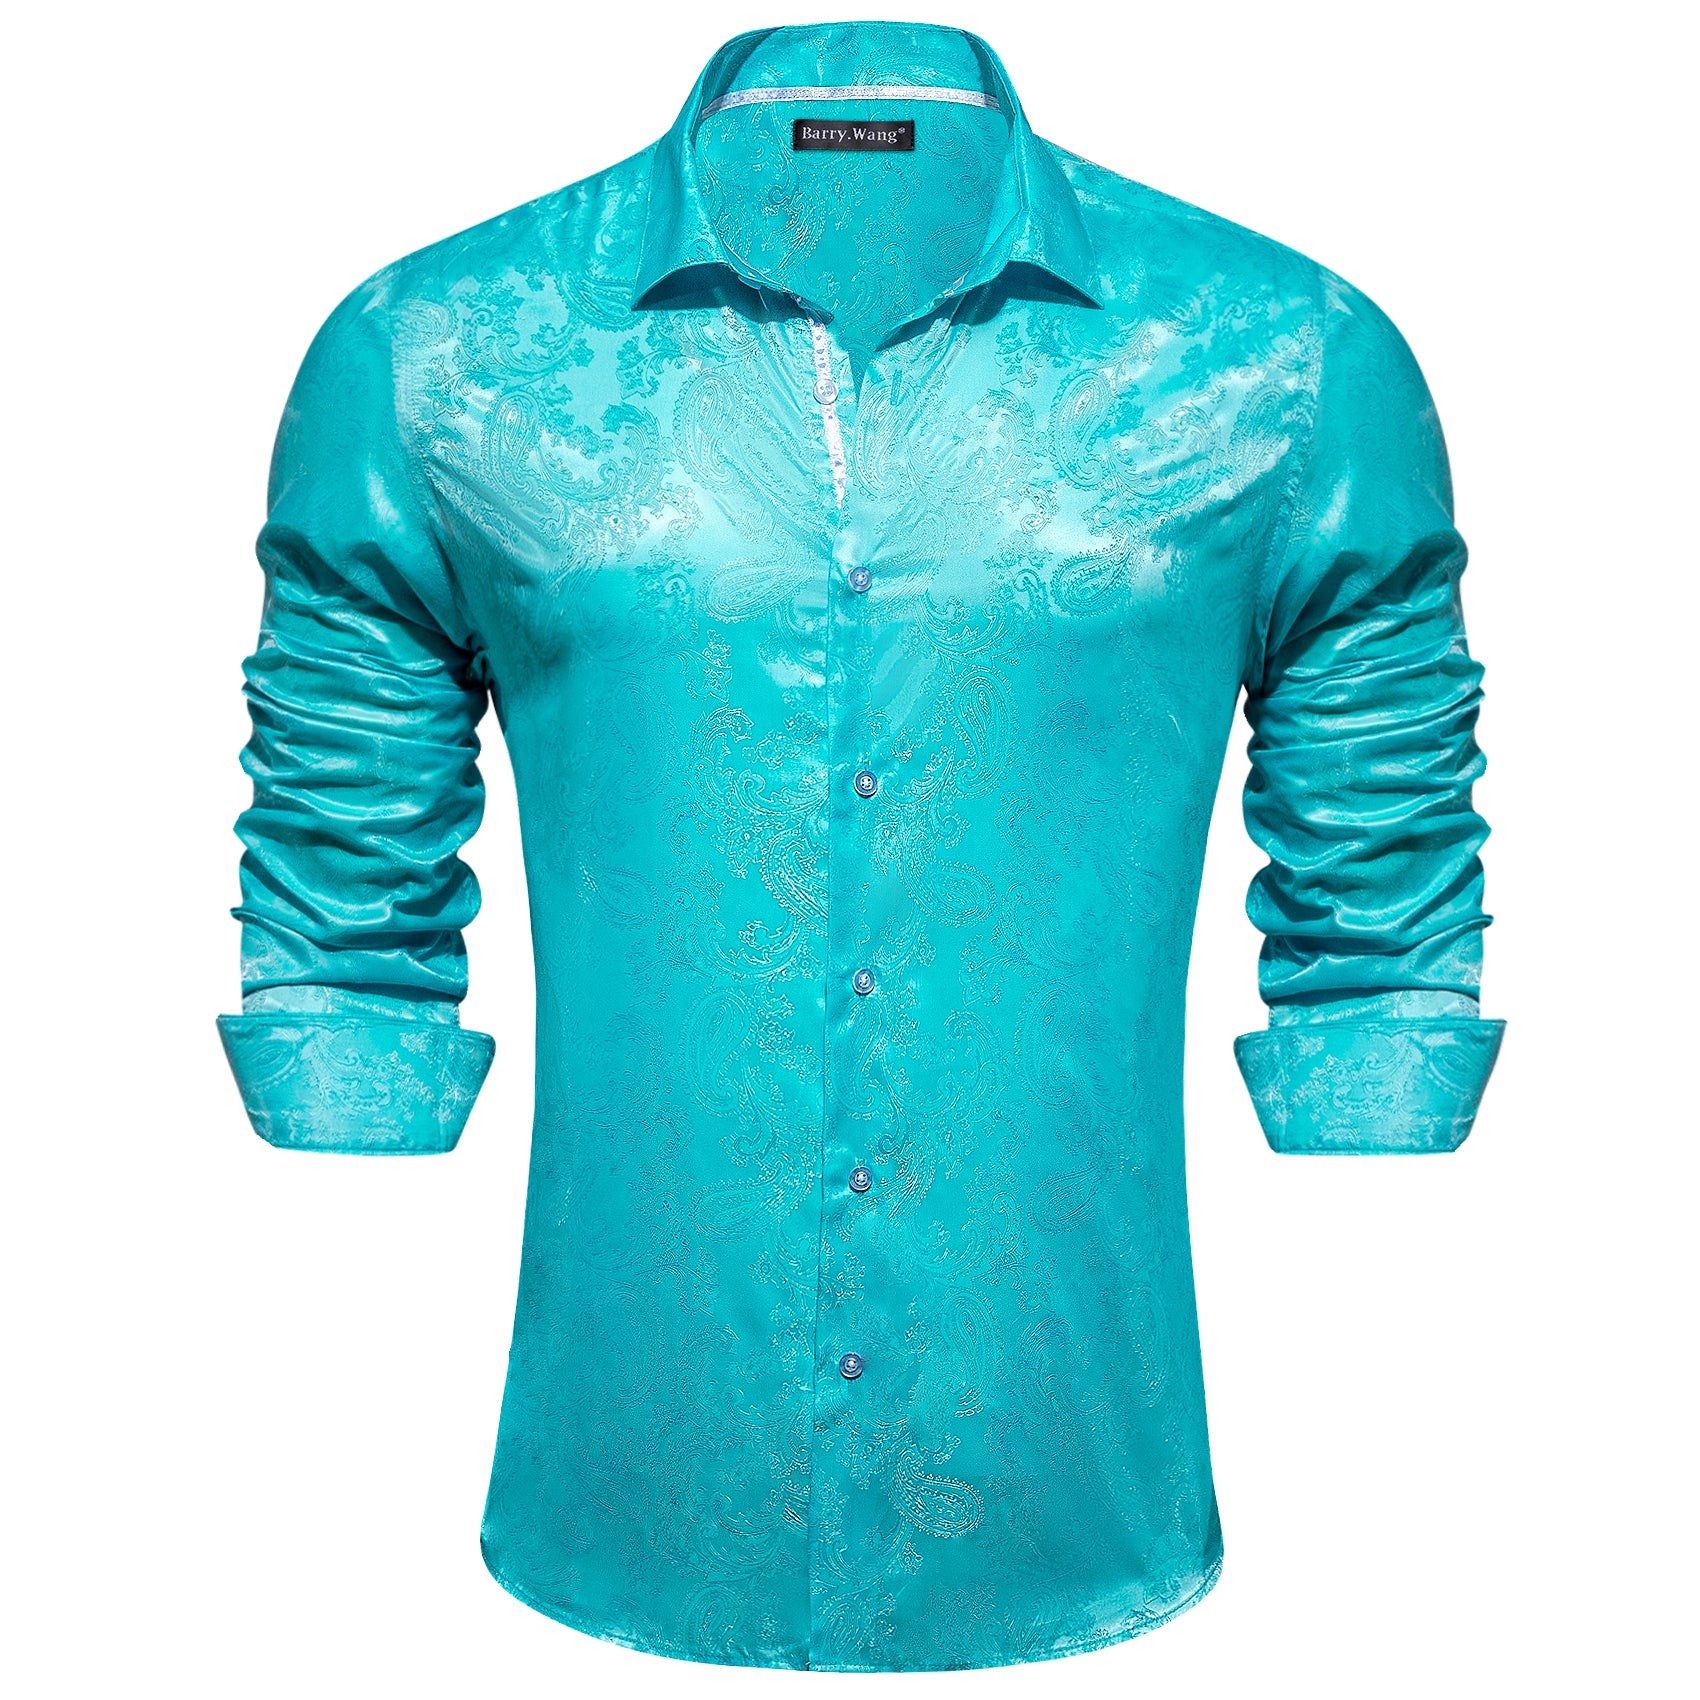 Barry.wang Aqua Paisley Silk Men's Shirt